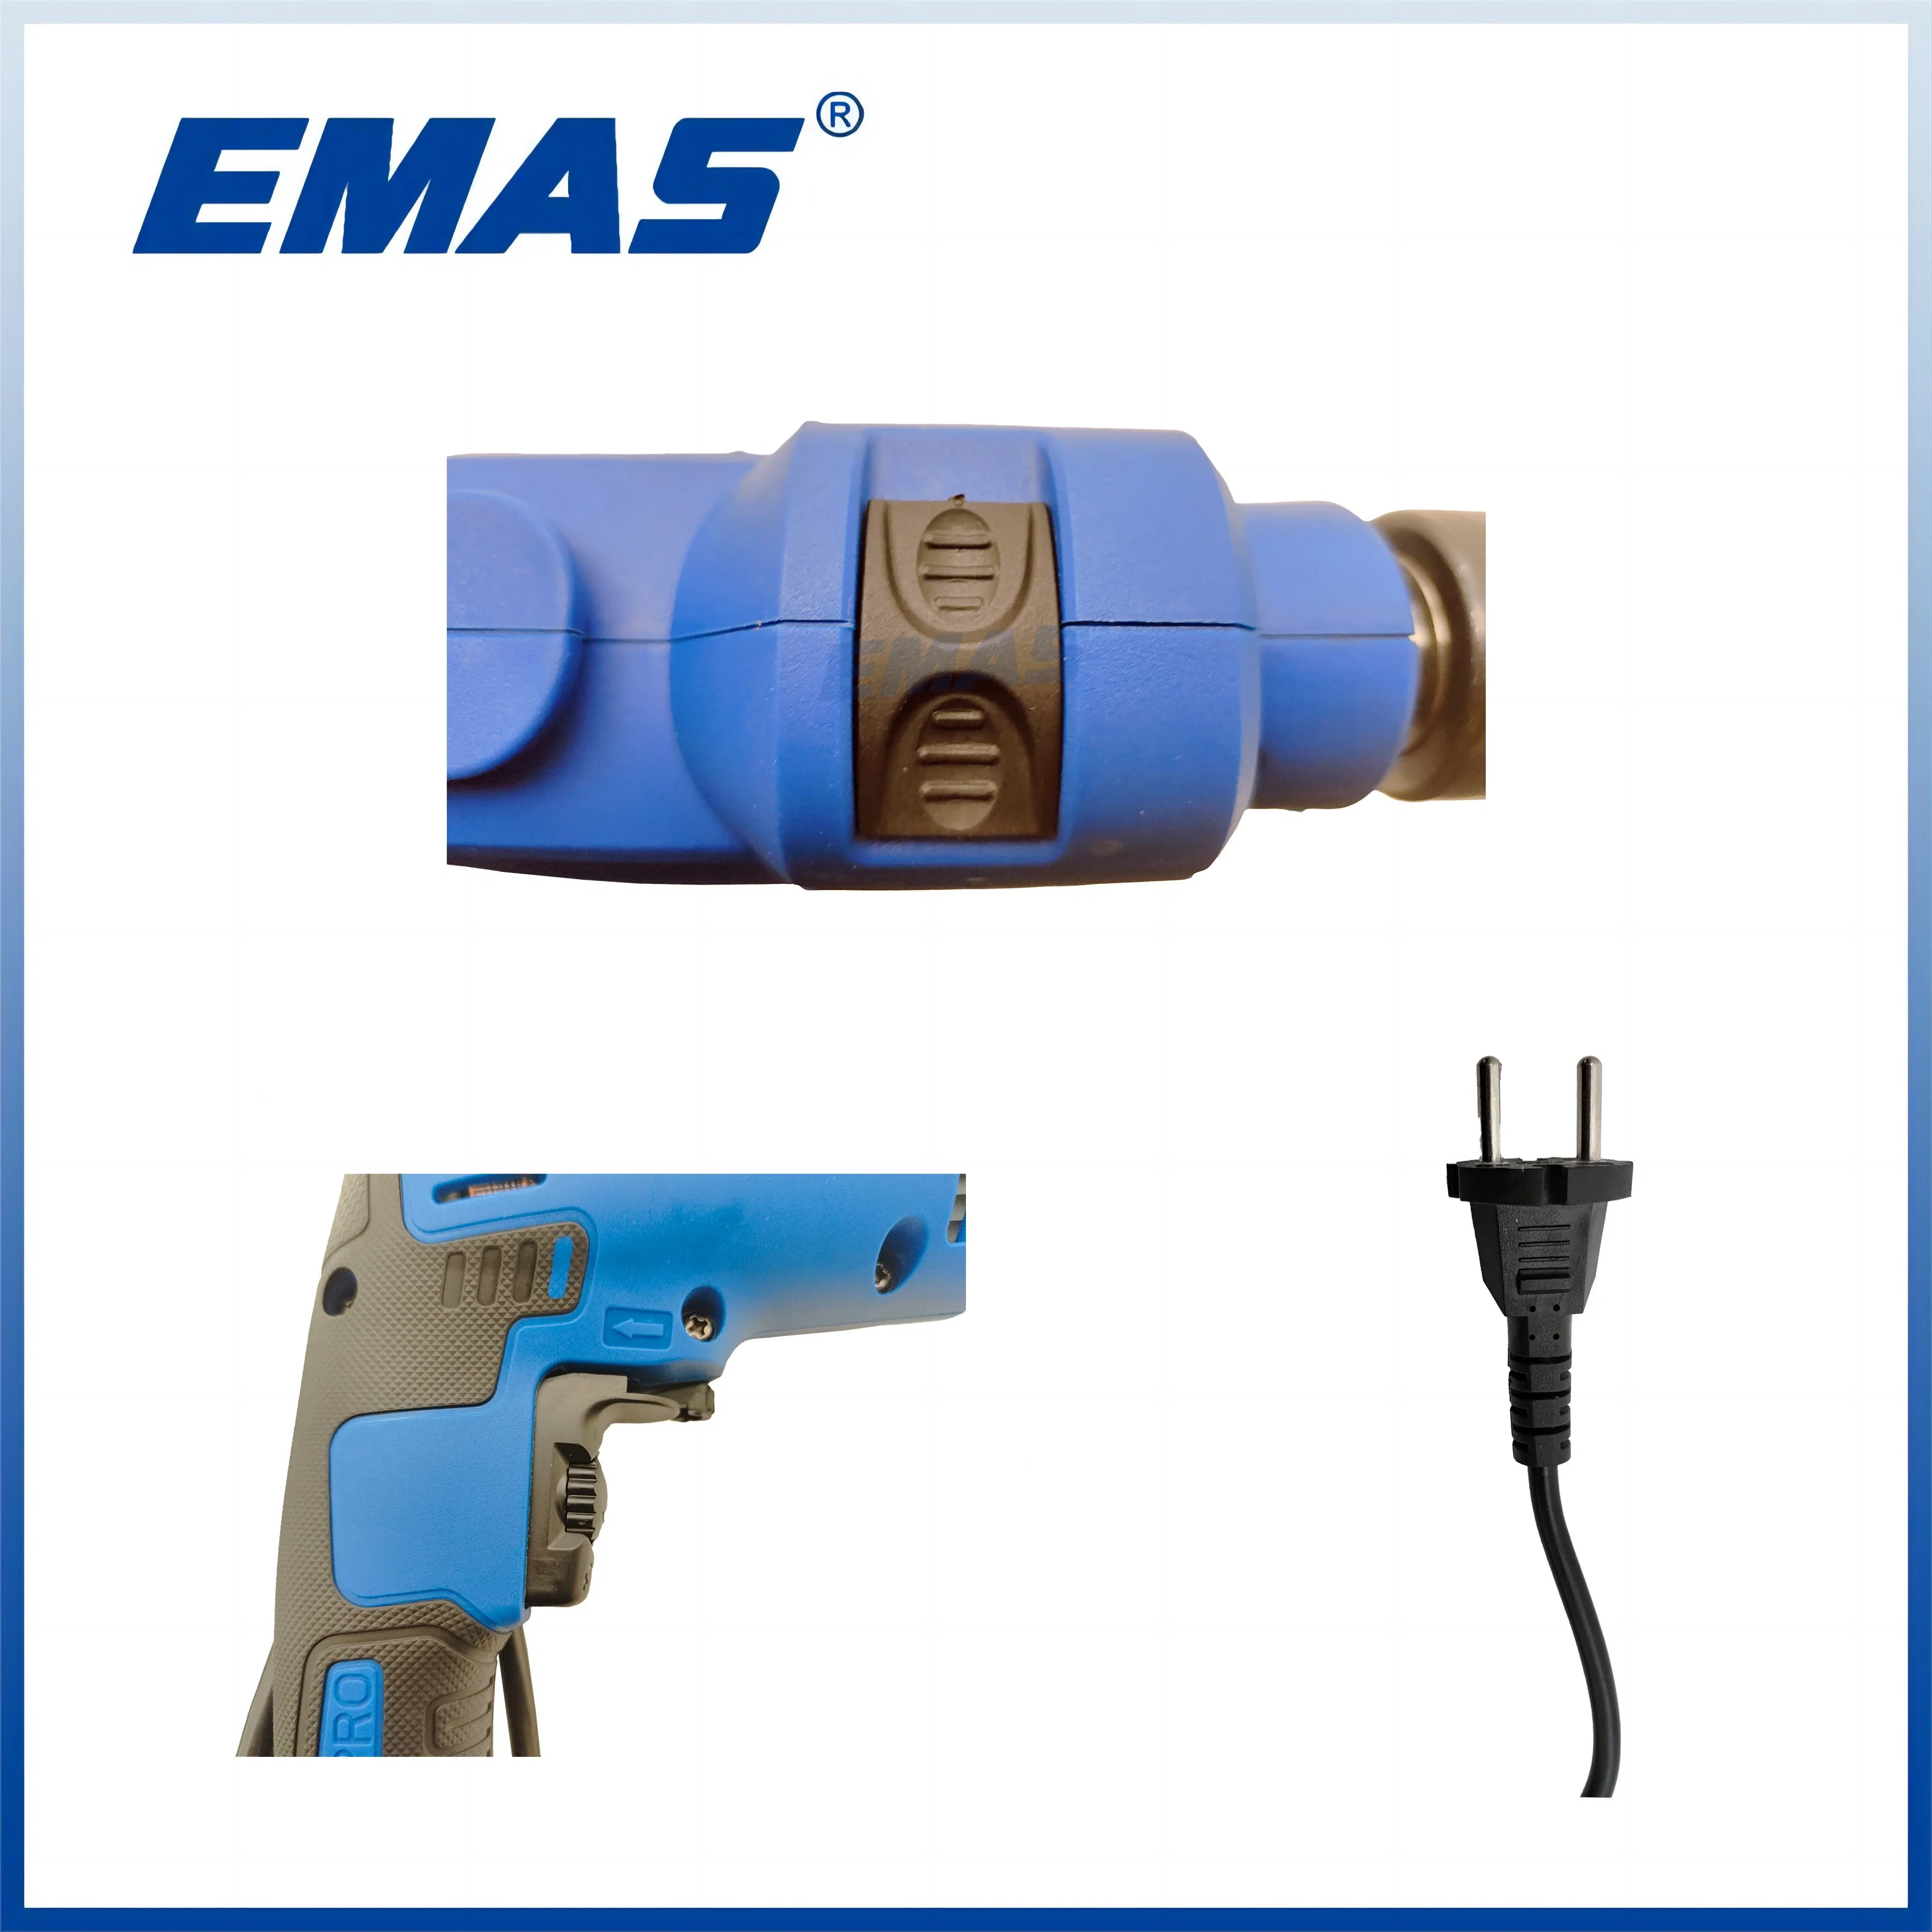 Emas Power Tools 220V Electric Drill 650W Impact Drill 13mm